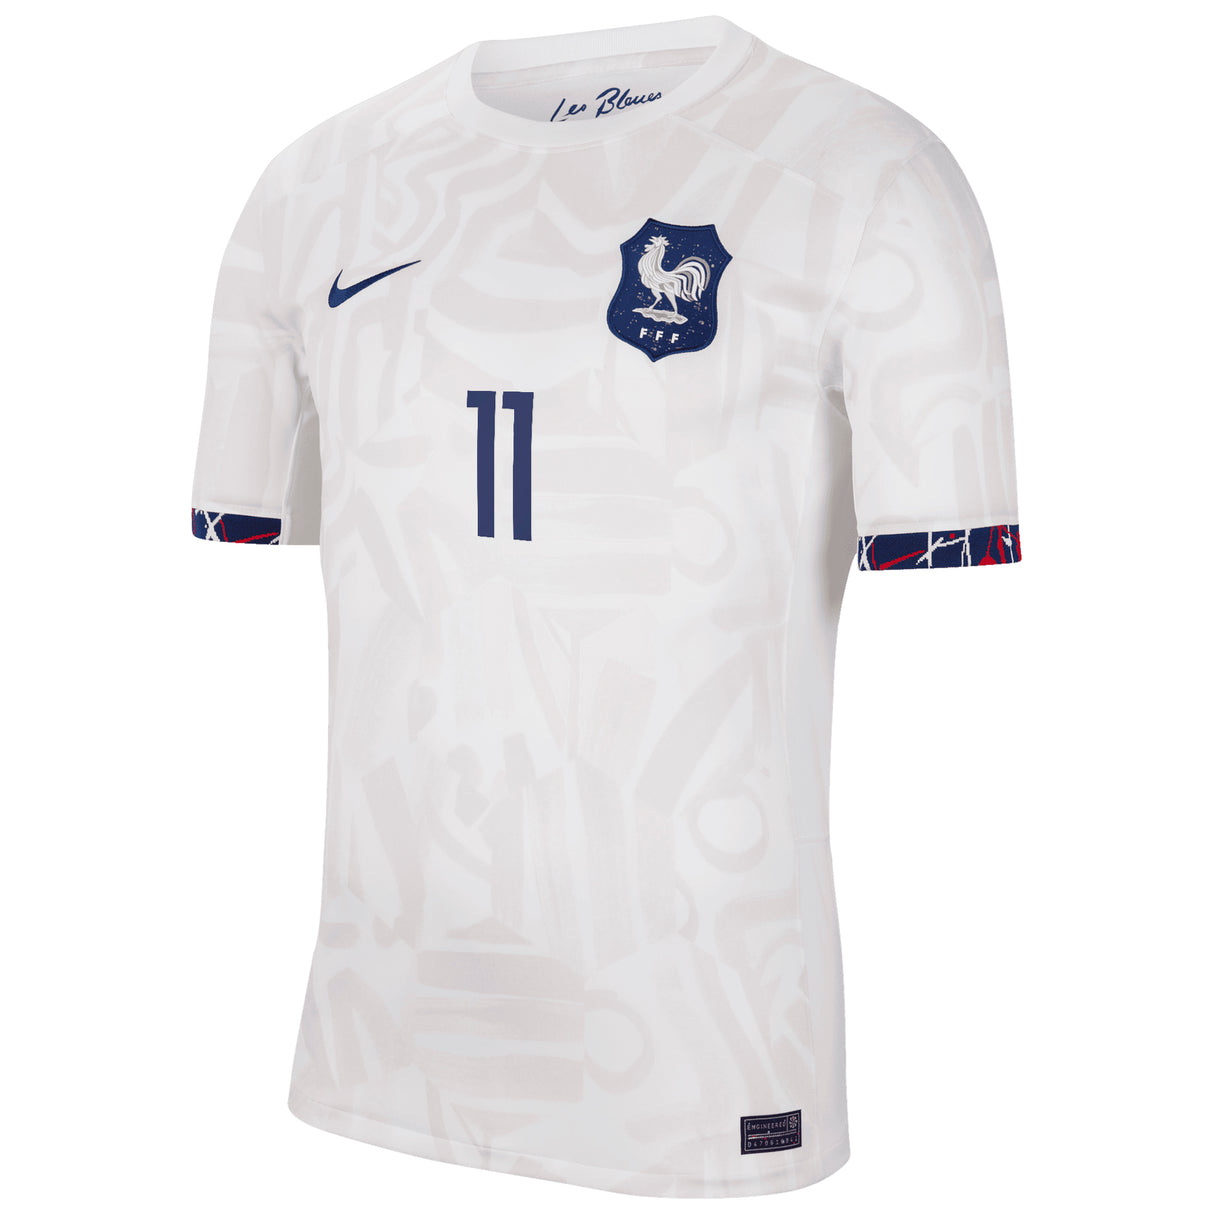 France Women Nike Away Stadium Shirt 2023-24 - Mens with Diani 11 printing - Kit Captain